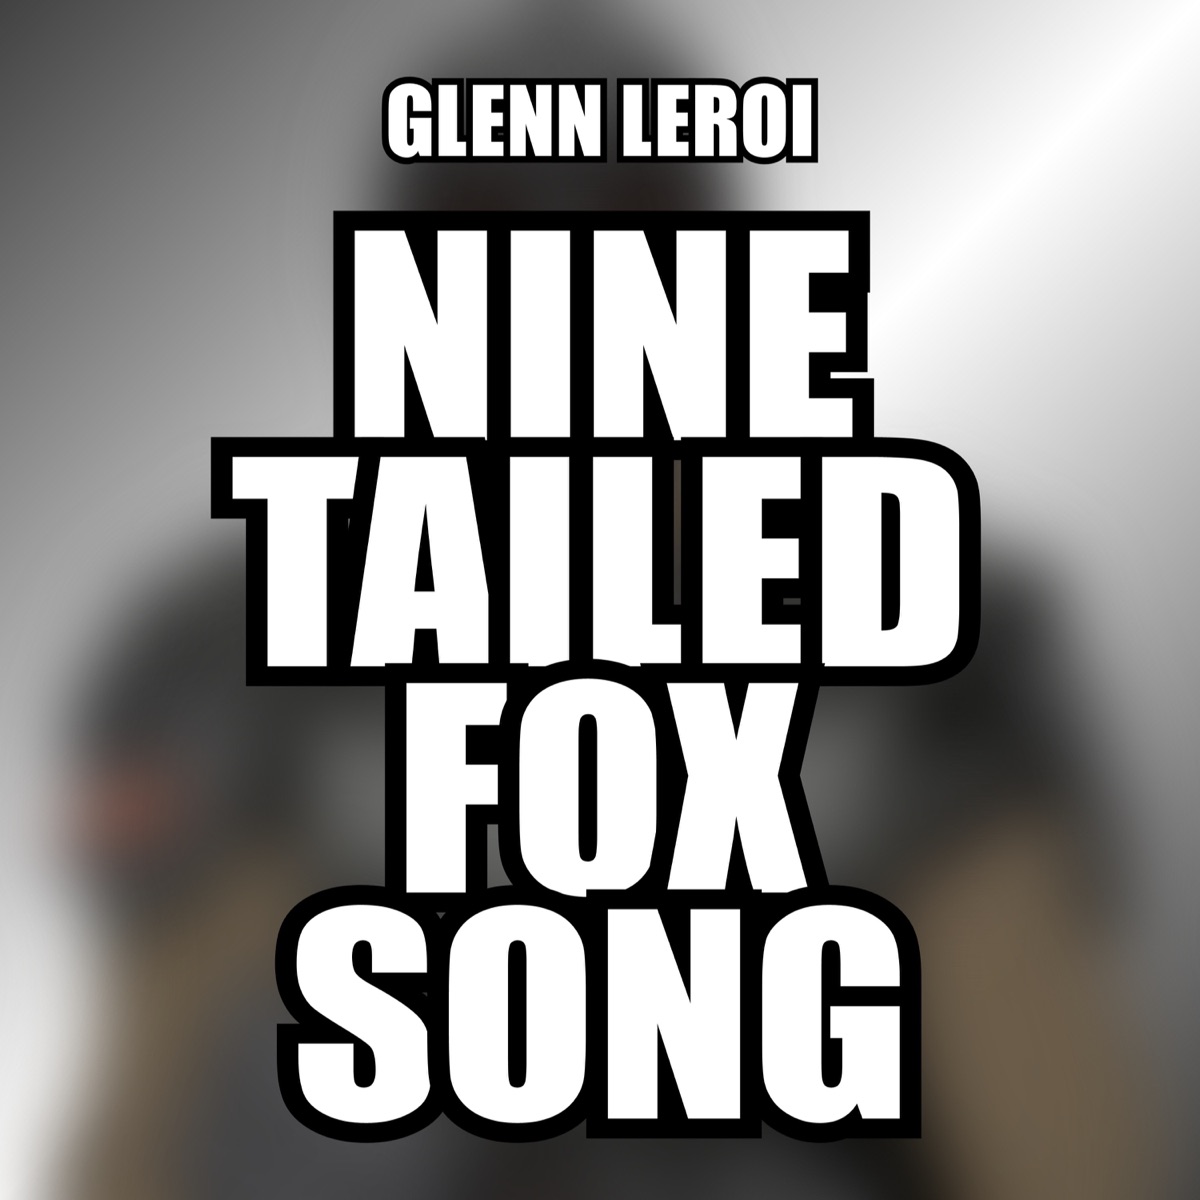 Old Ai (Scp-079 Song) (Alternate Extended Version) - Single - Album by  Glenn Leroi - Apple Music